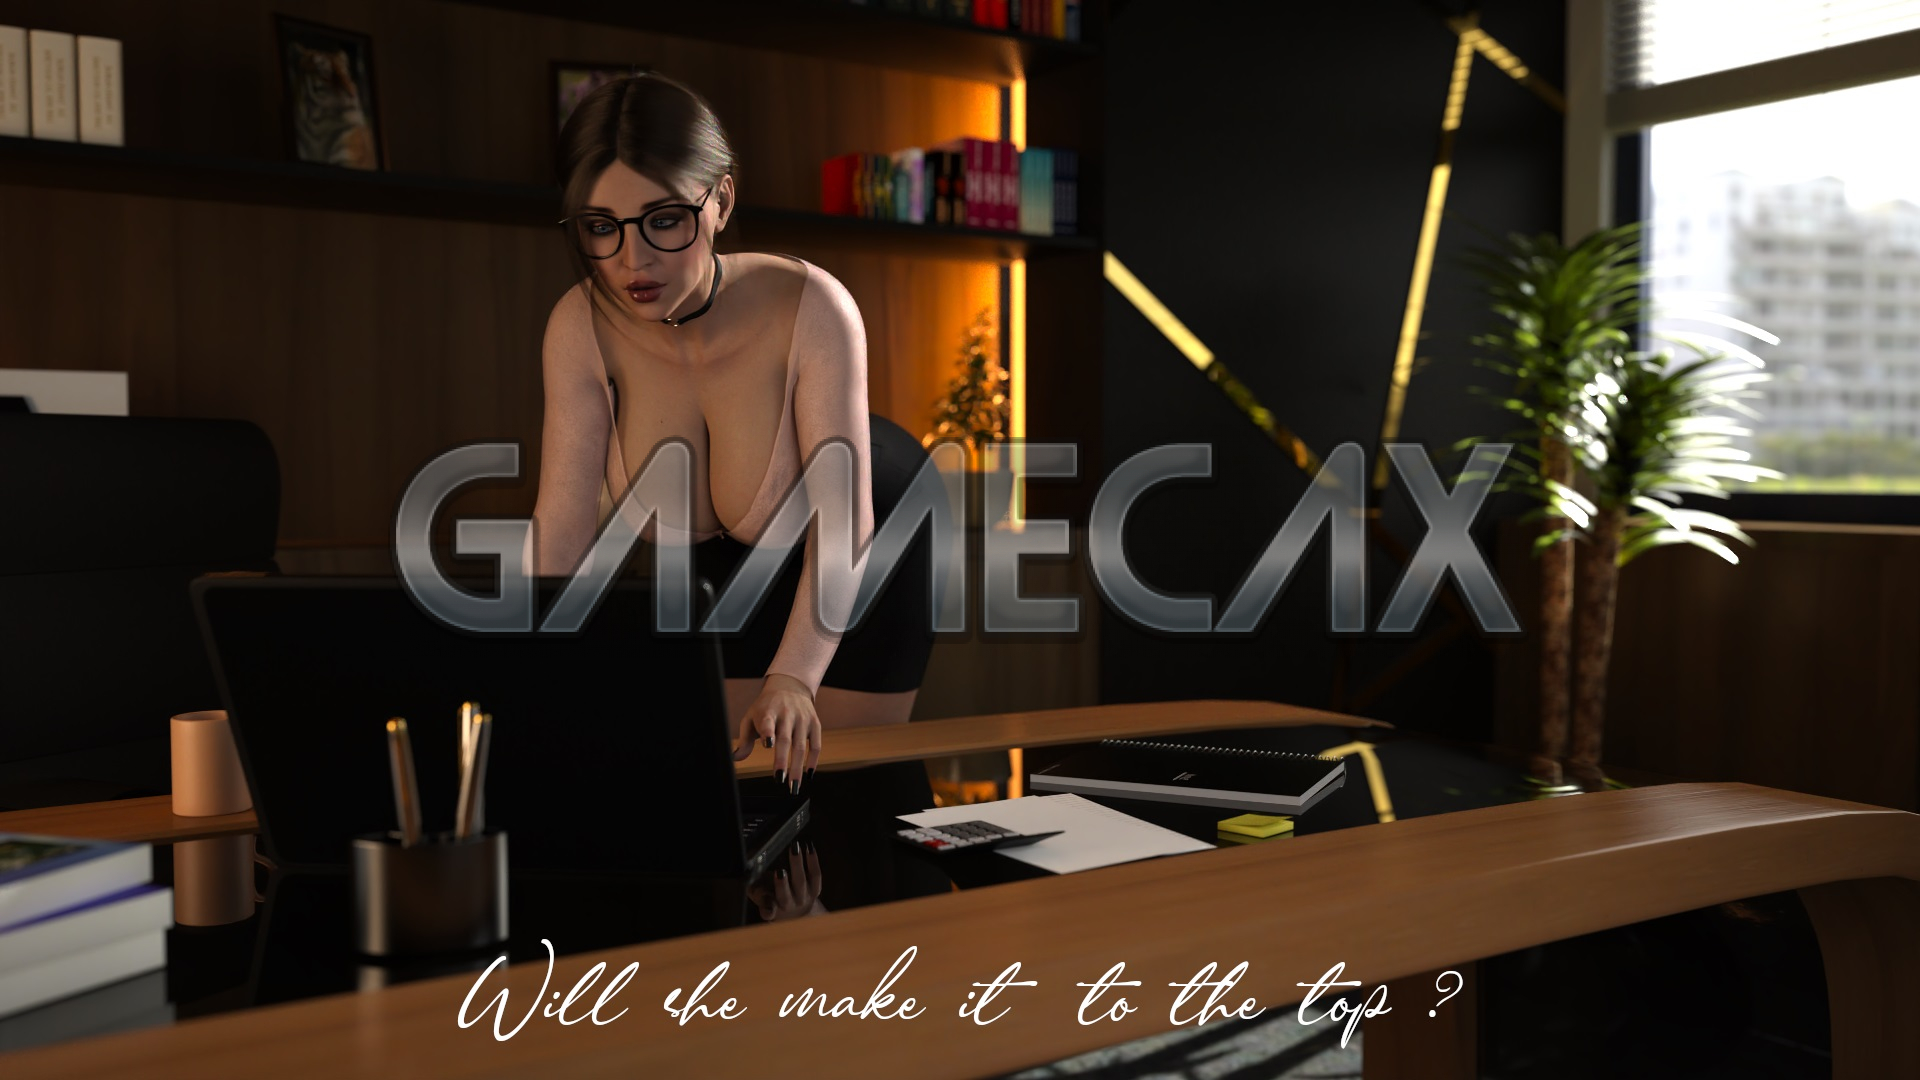 The Office [Ep. 3 (v0.3b)] [APK] â‹† Gamecax